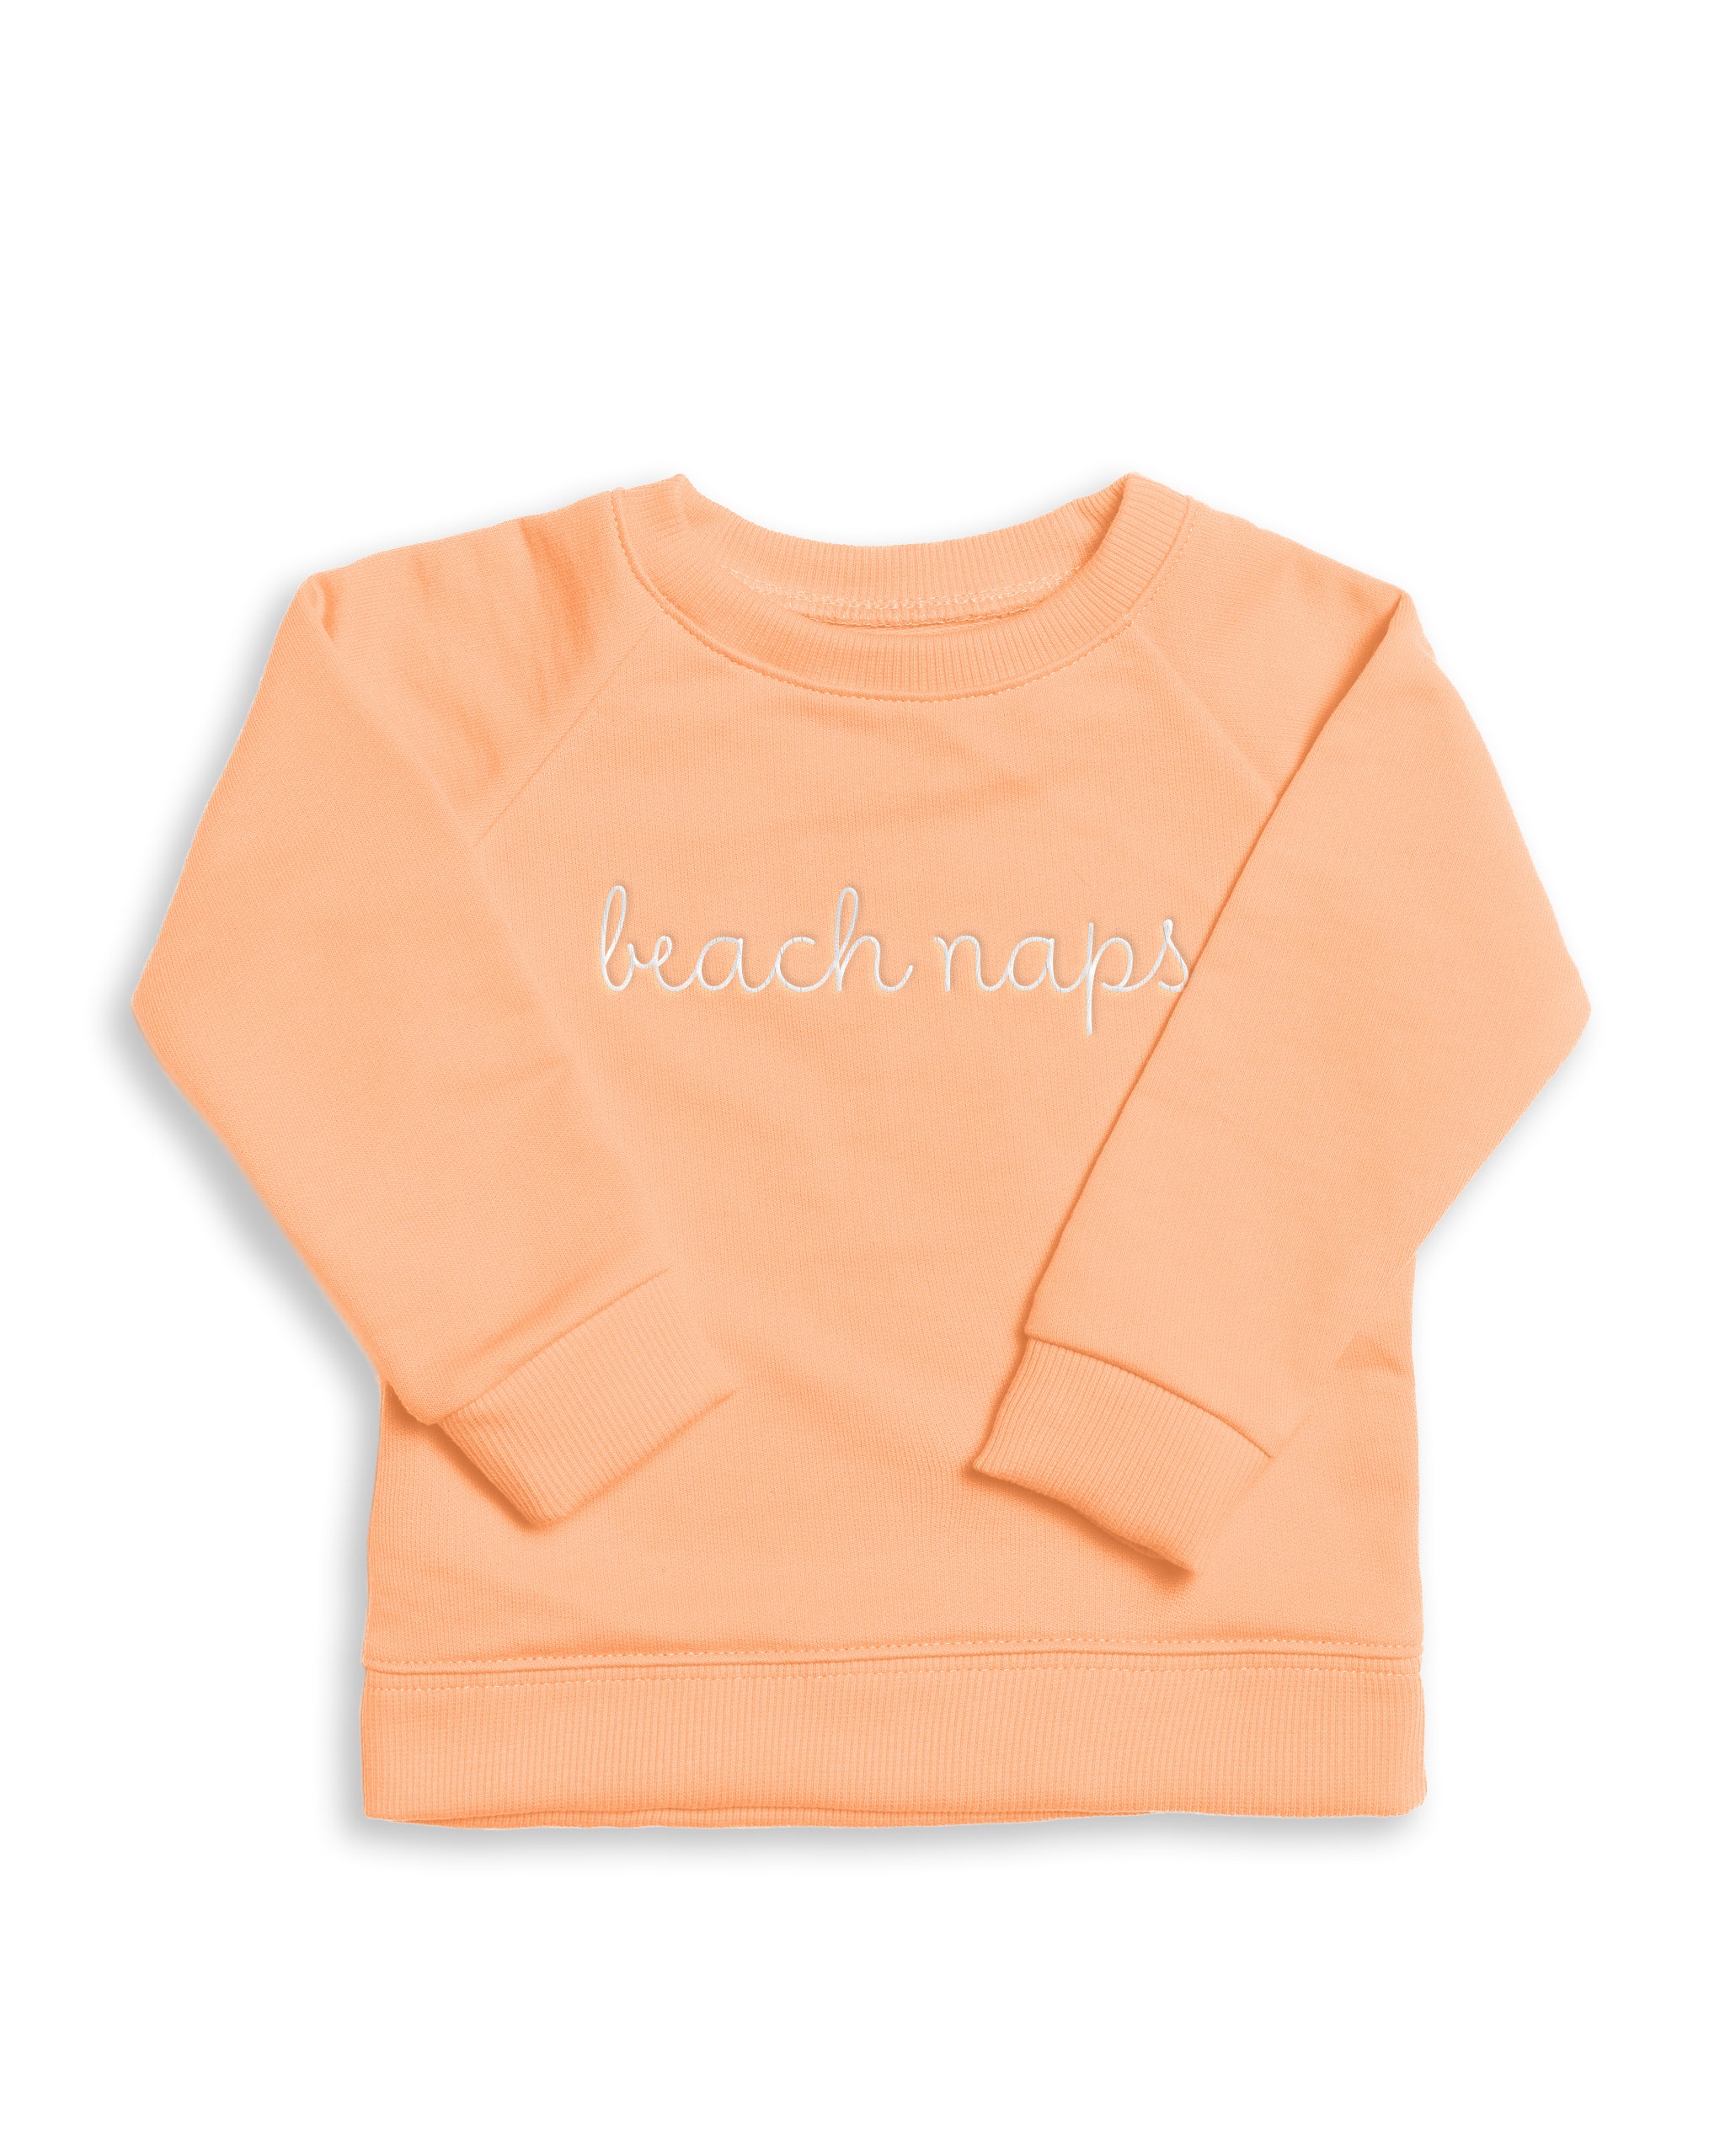 The Organic Embroidered Pullover Sweatshirt [Orange Burst Beach Naps]